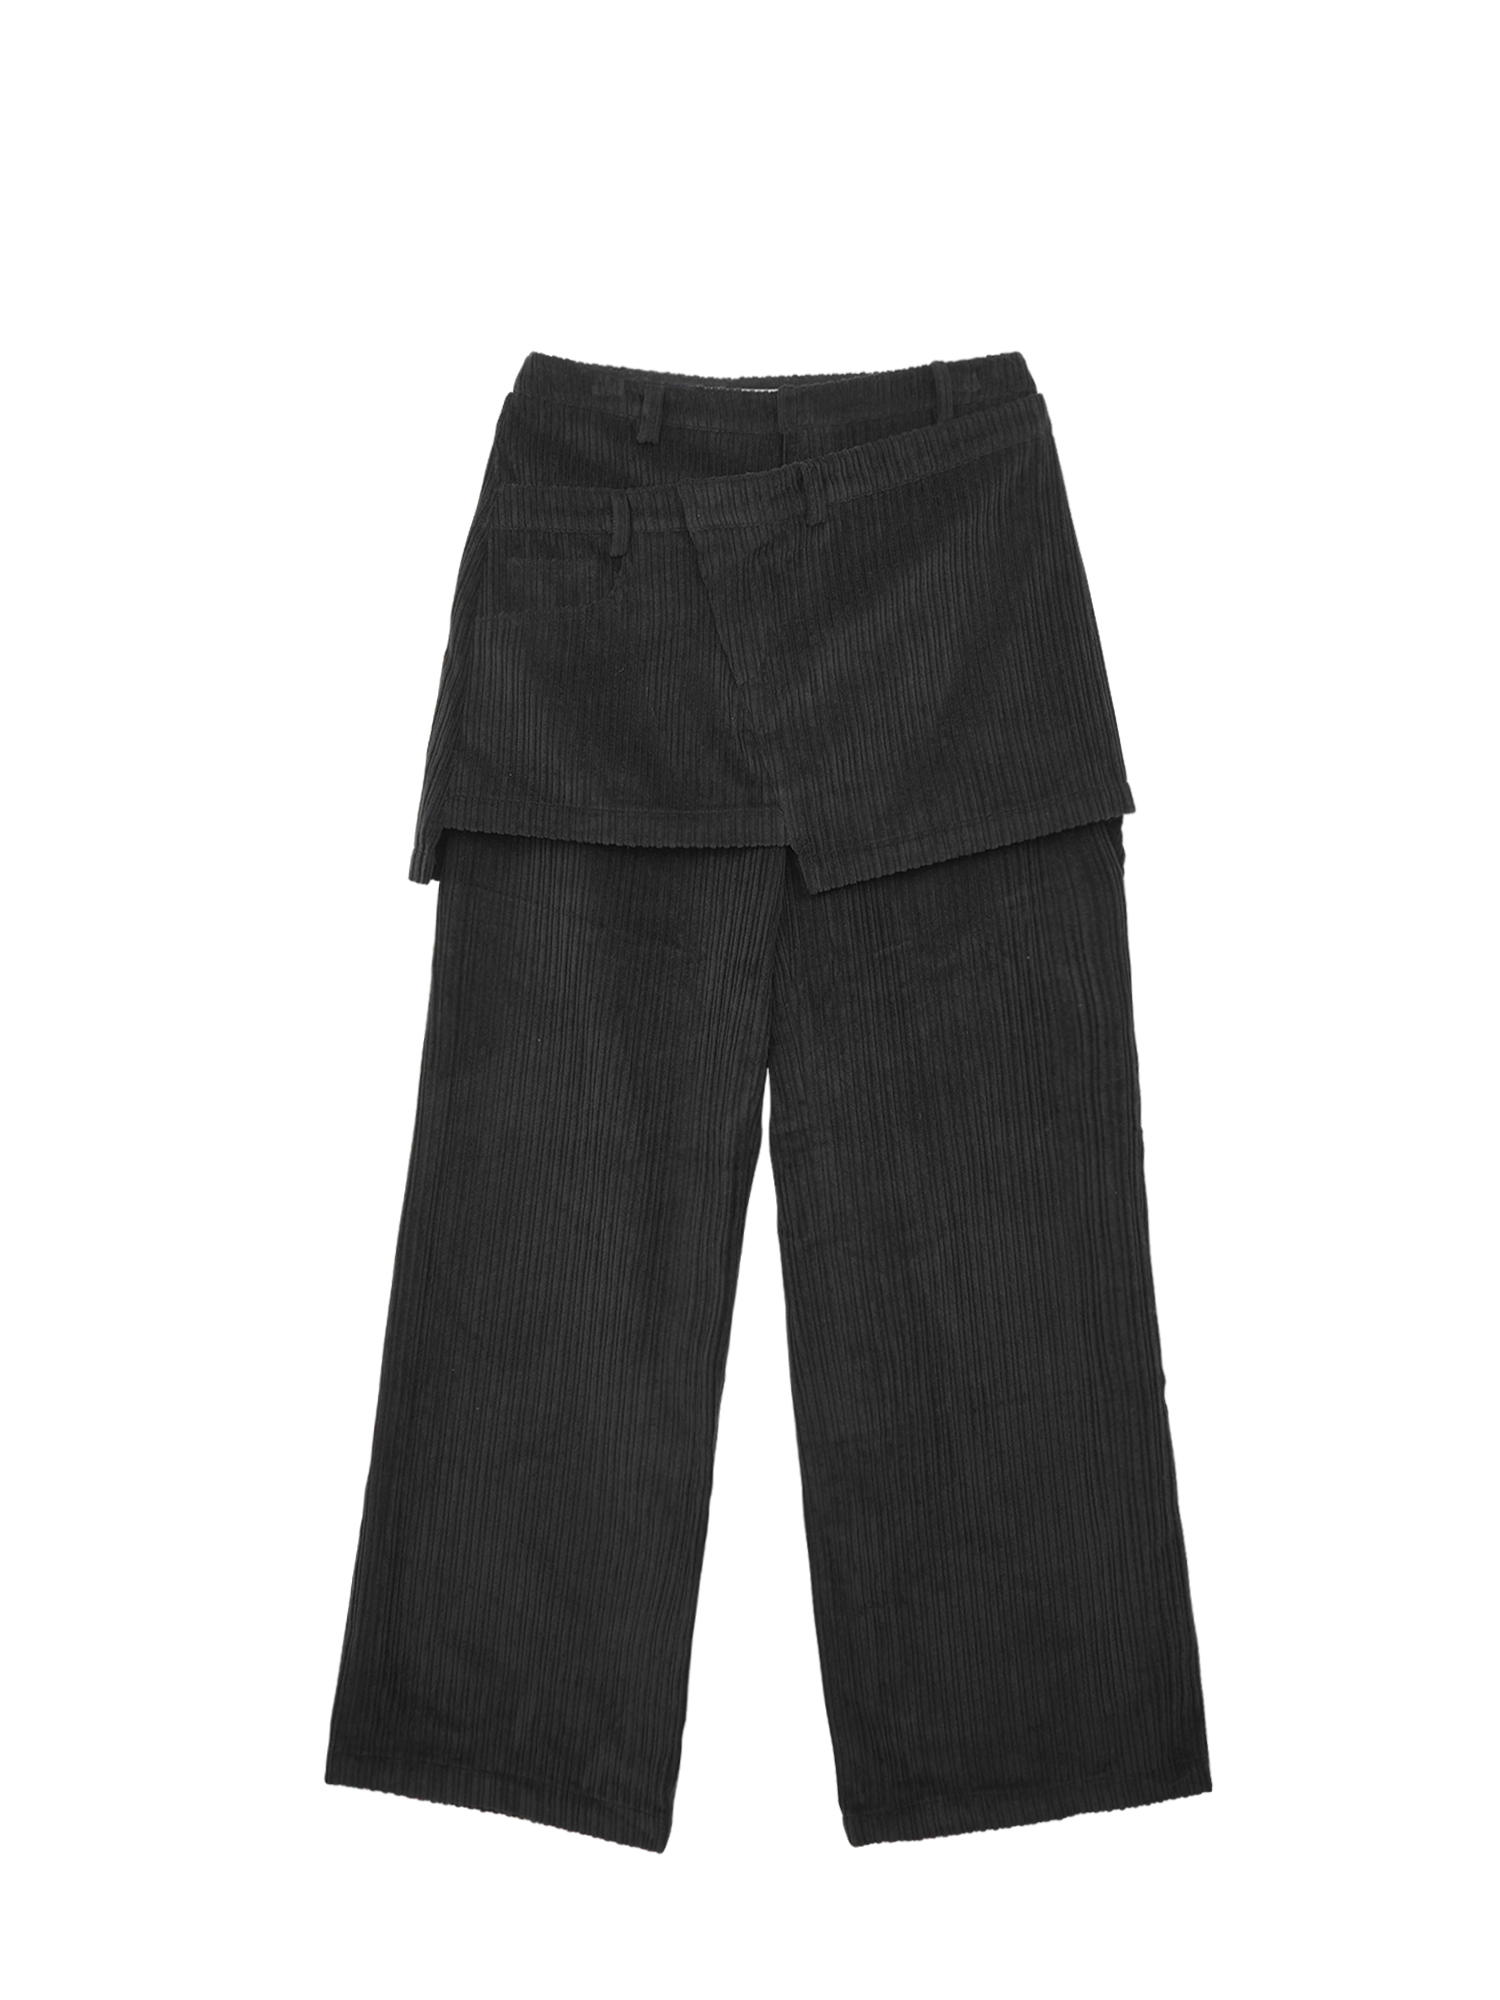 Double Layered Corduroy Pants - Black